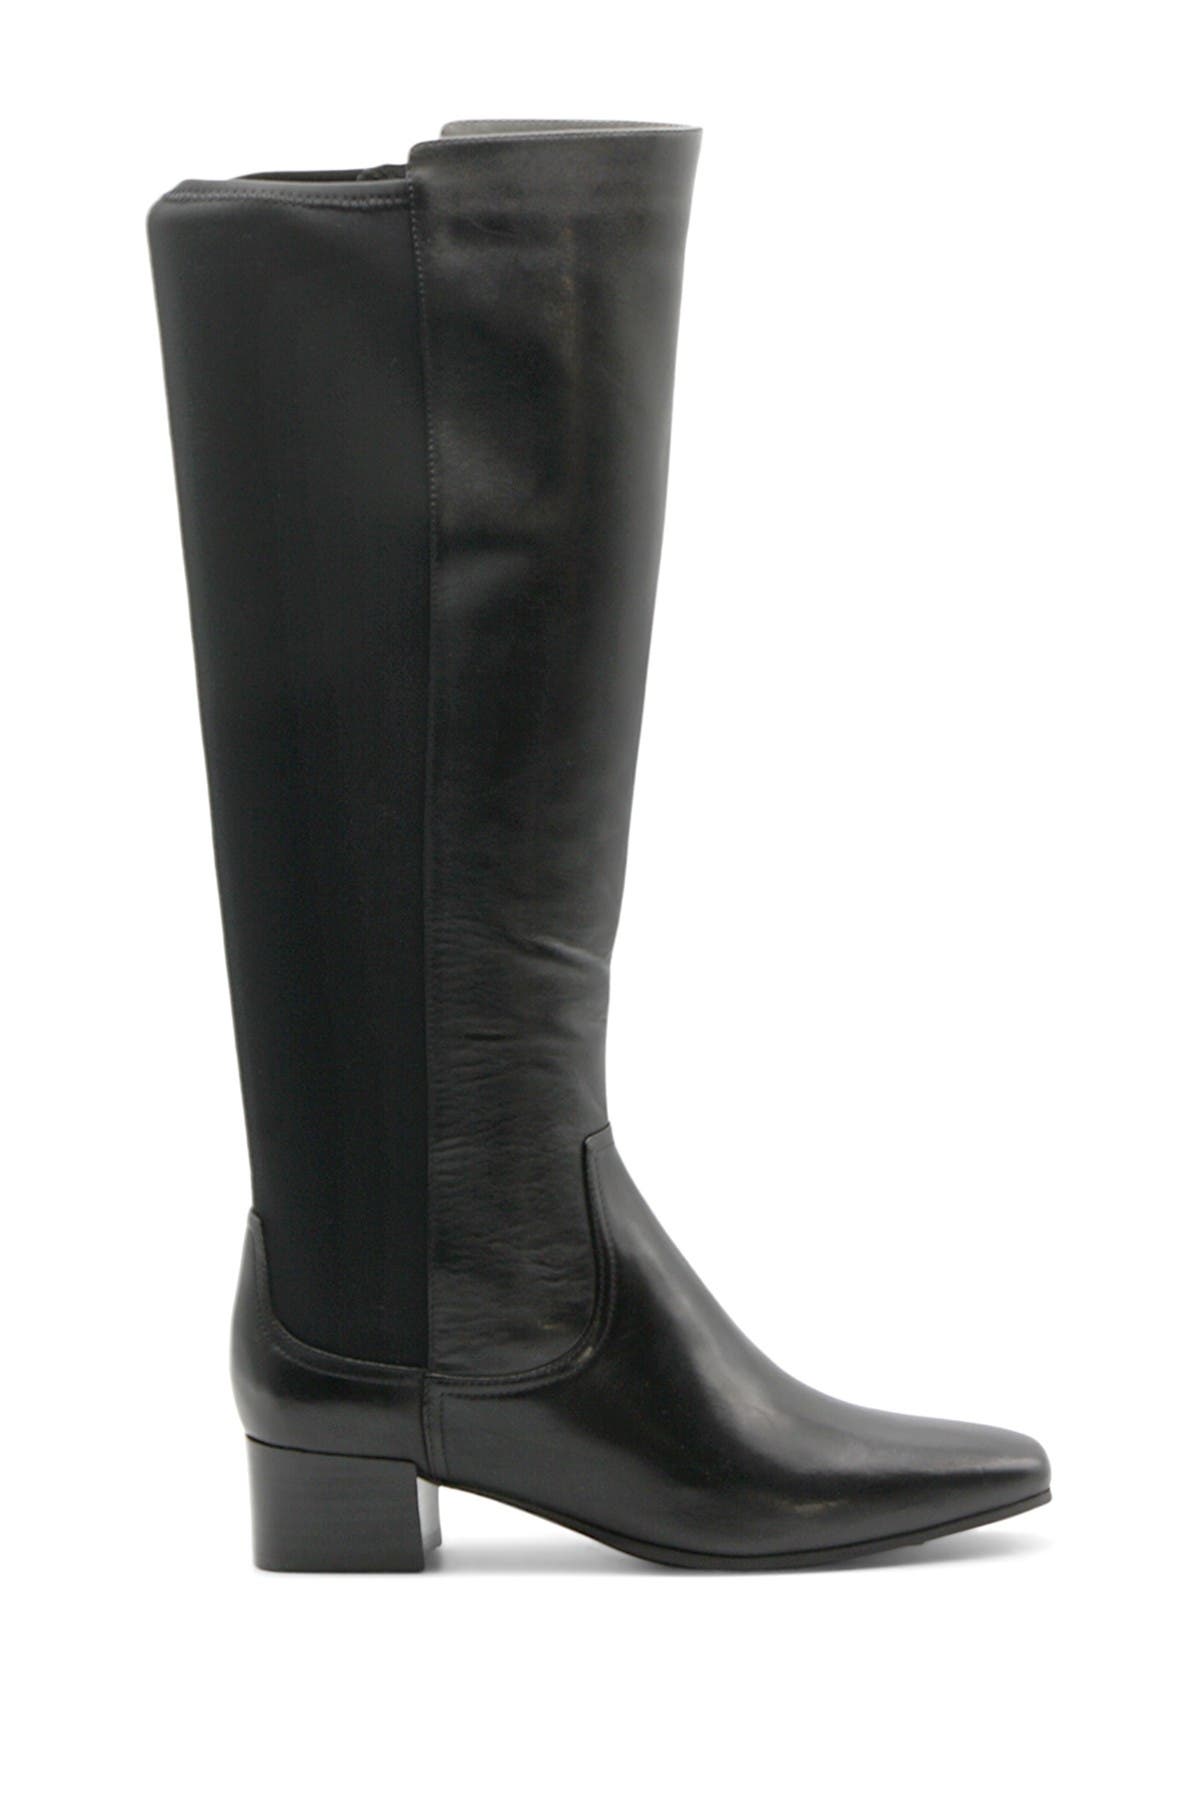 Adrienne Vittadini Cecil Tall Boot In Black